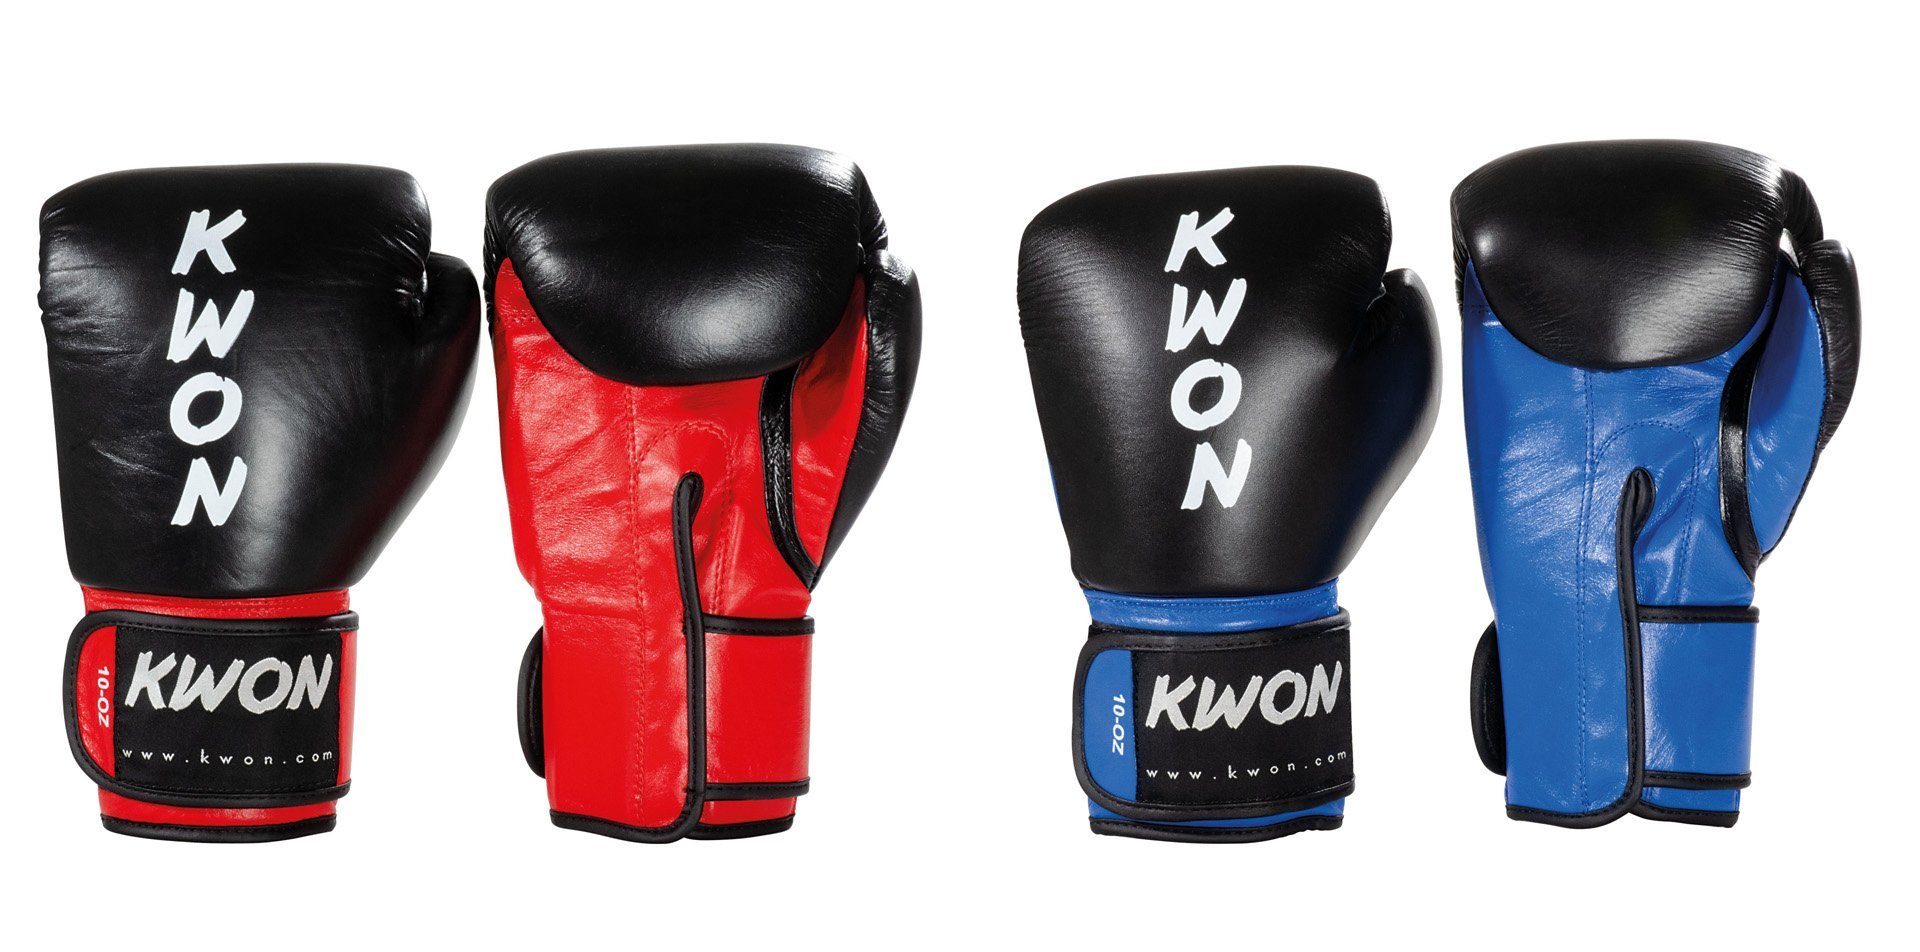 Champ Box-Handschuhe Leder, KWON schwarz/gelb (Vollkontakt, Boxen Profi Form, Ergo anerkannt Boxhandschuhe Kickboxen Paar), WKU KO Echtes Ausführung, Thaiboxen Profi Leder